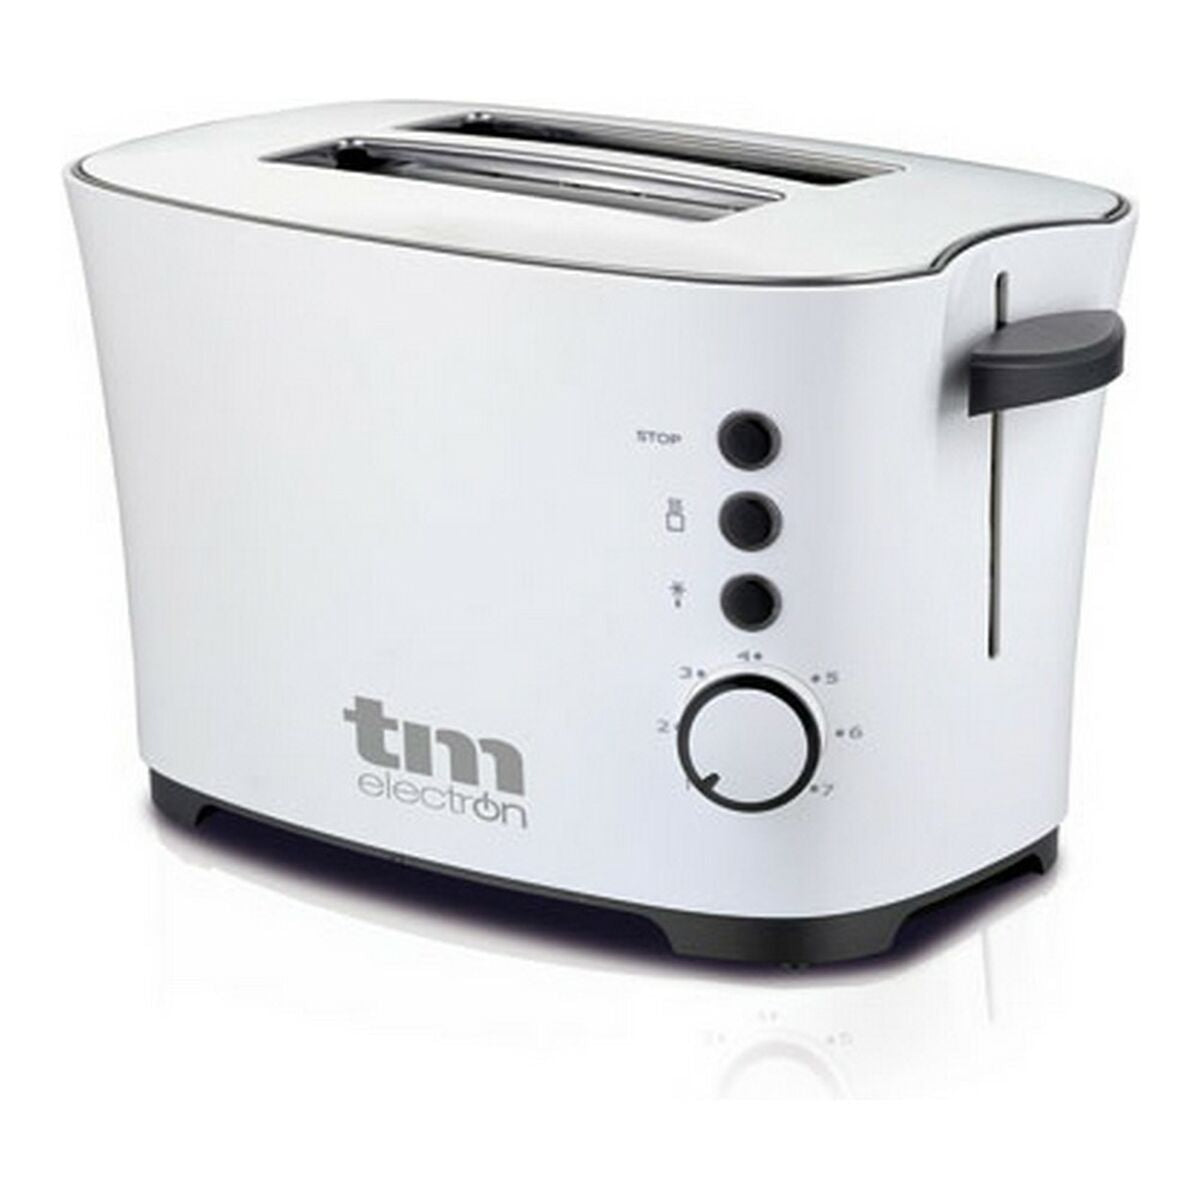 Toaster TM Electron 850 W - CA International  